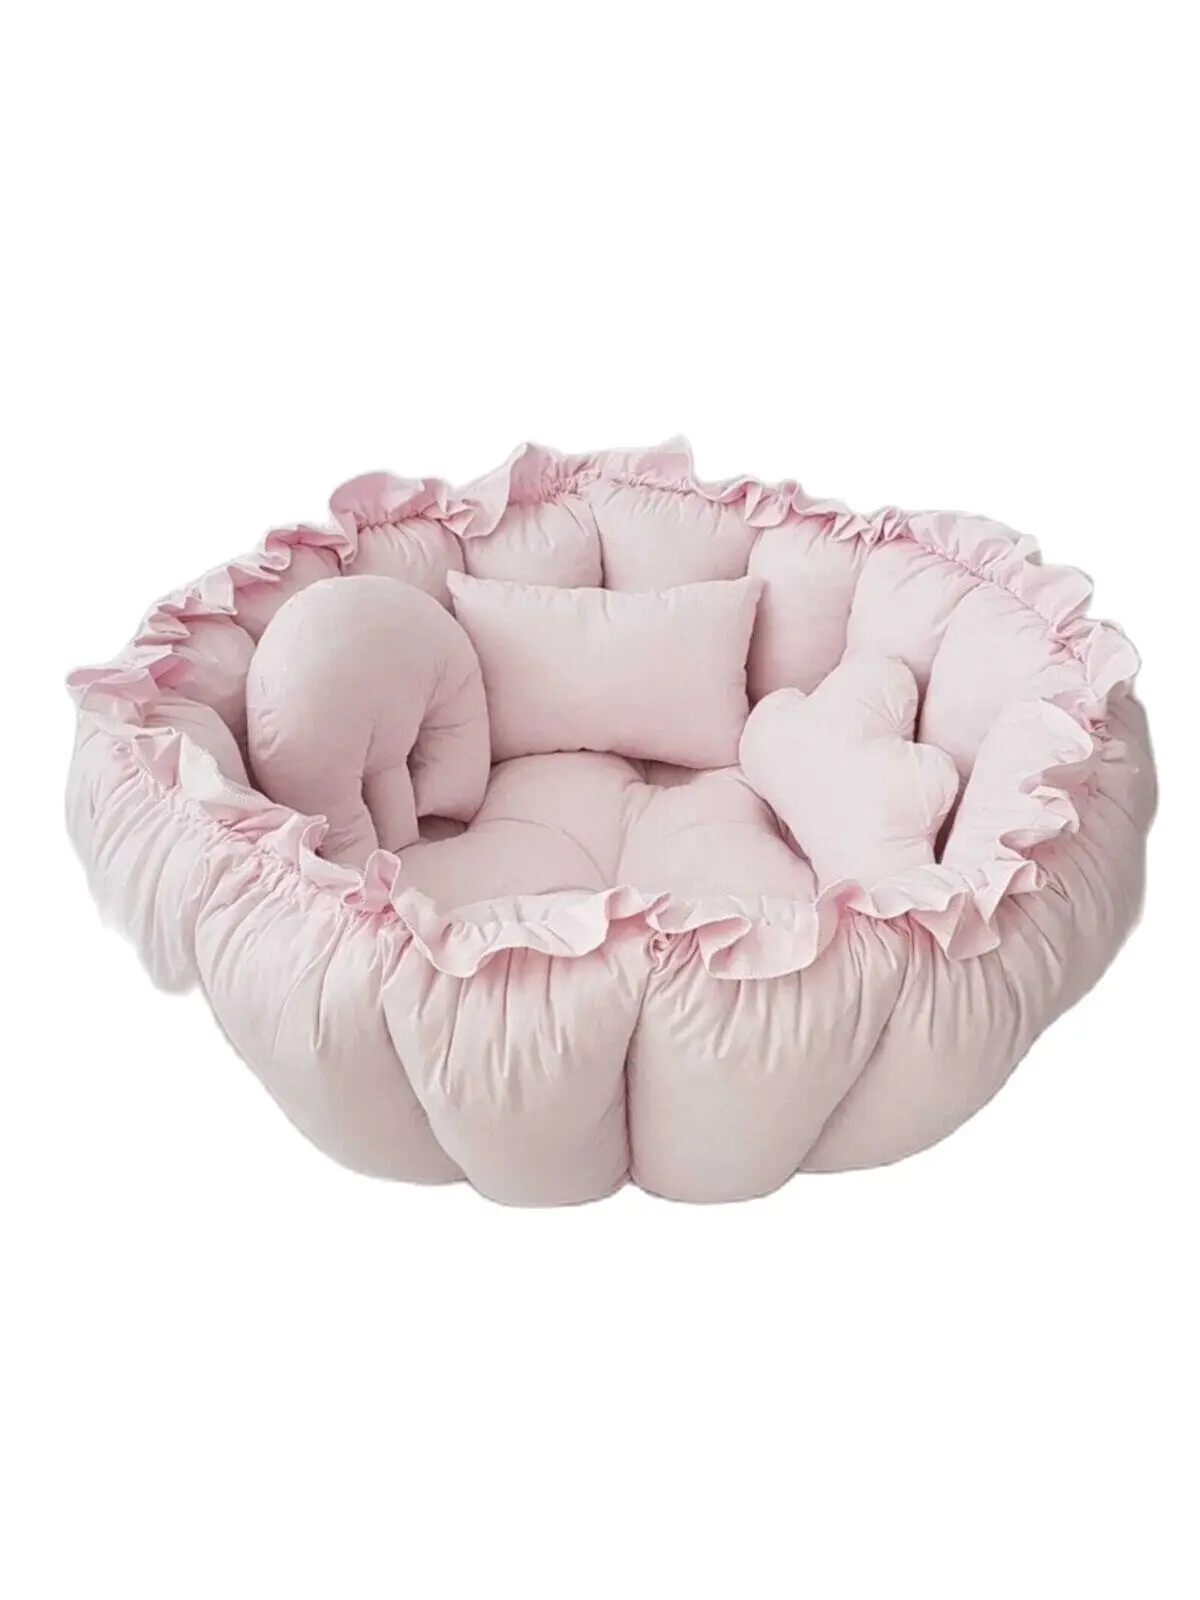 

Retractable Sleep Game Cushion Cotton Cloth Anti-Allergic 3 PCs Pillow Set 0-4 Age Washable Stylish Design